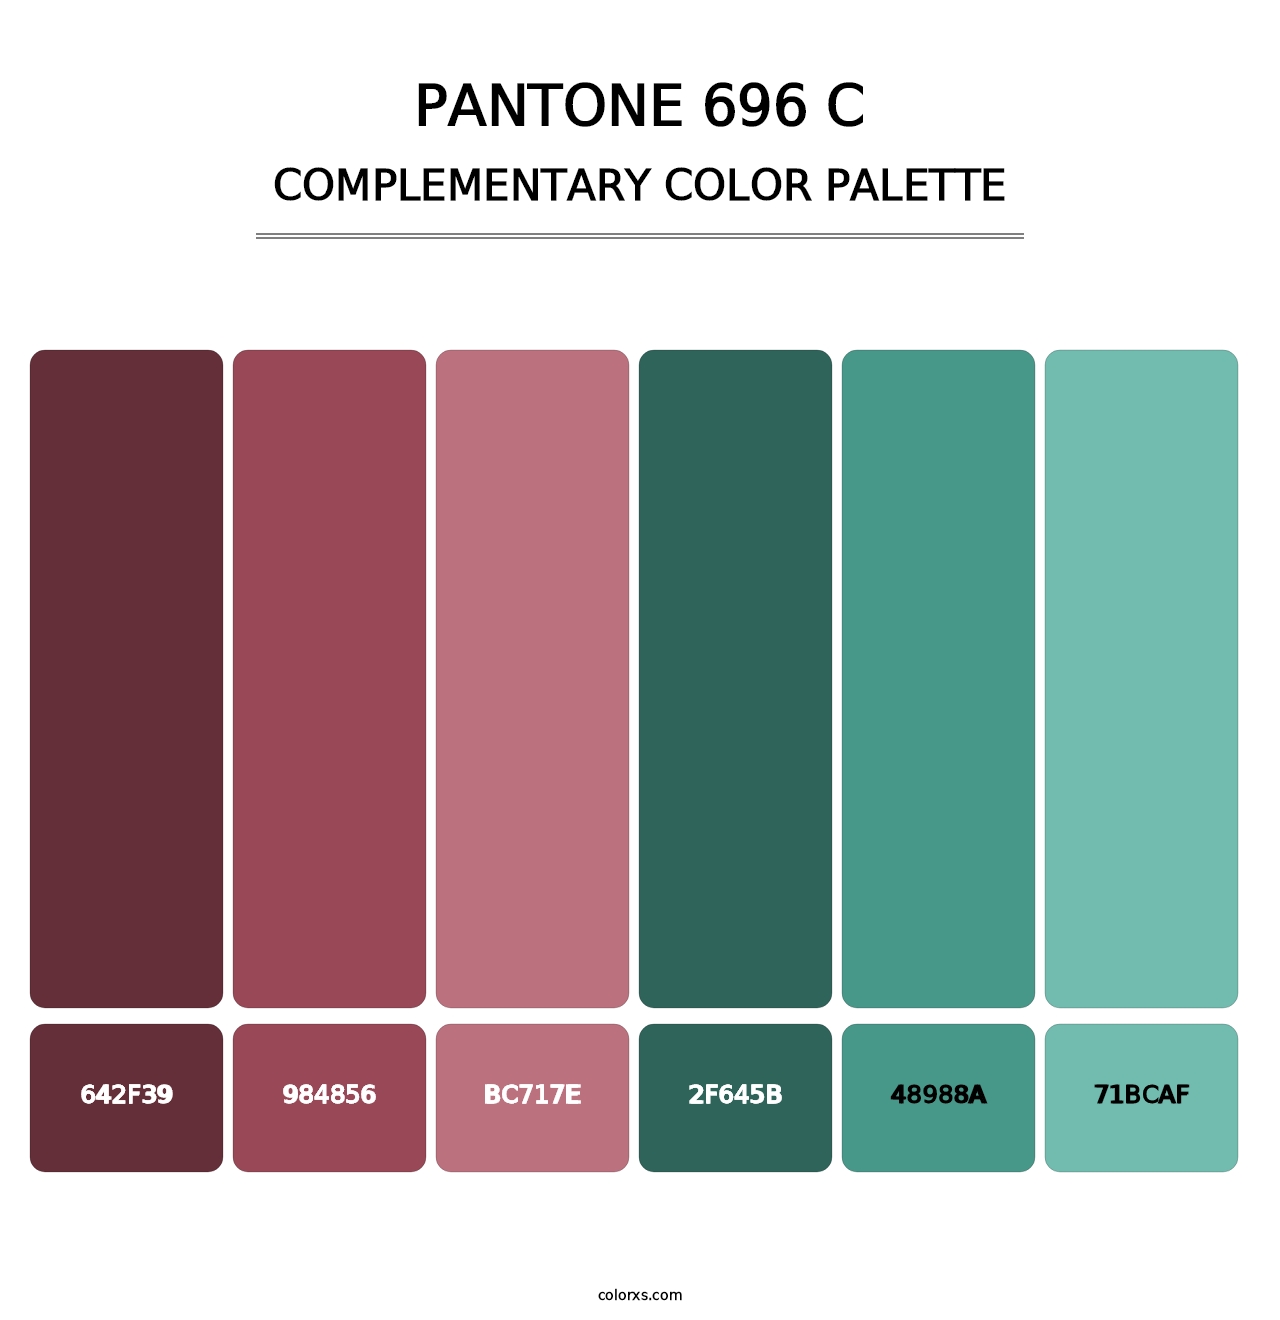 PANTONE 696 C - Complementary Color Palette